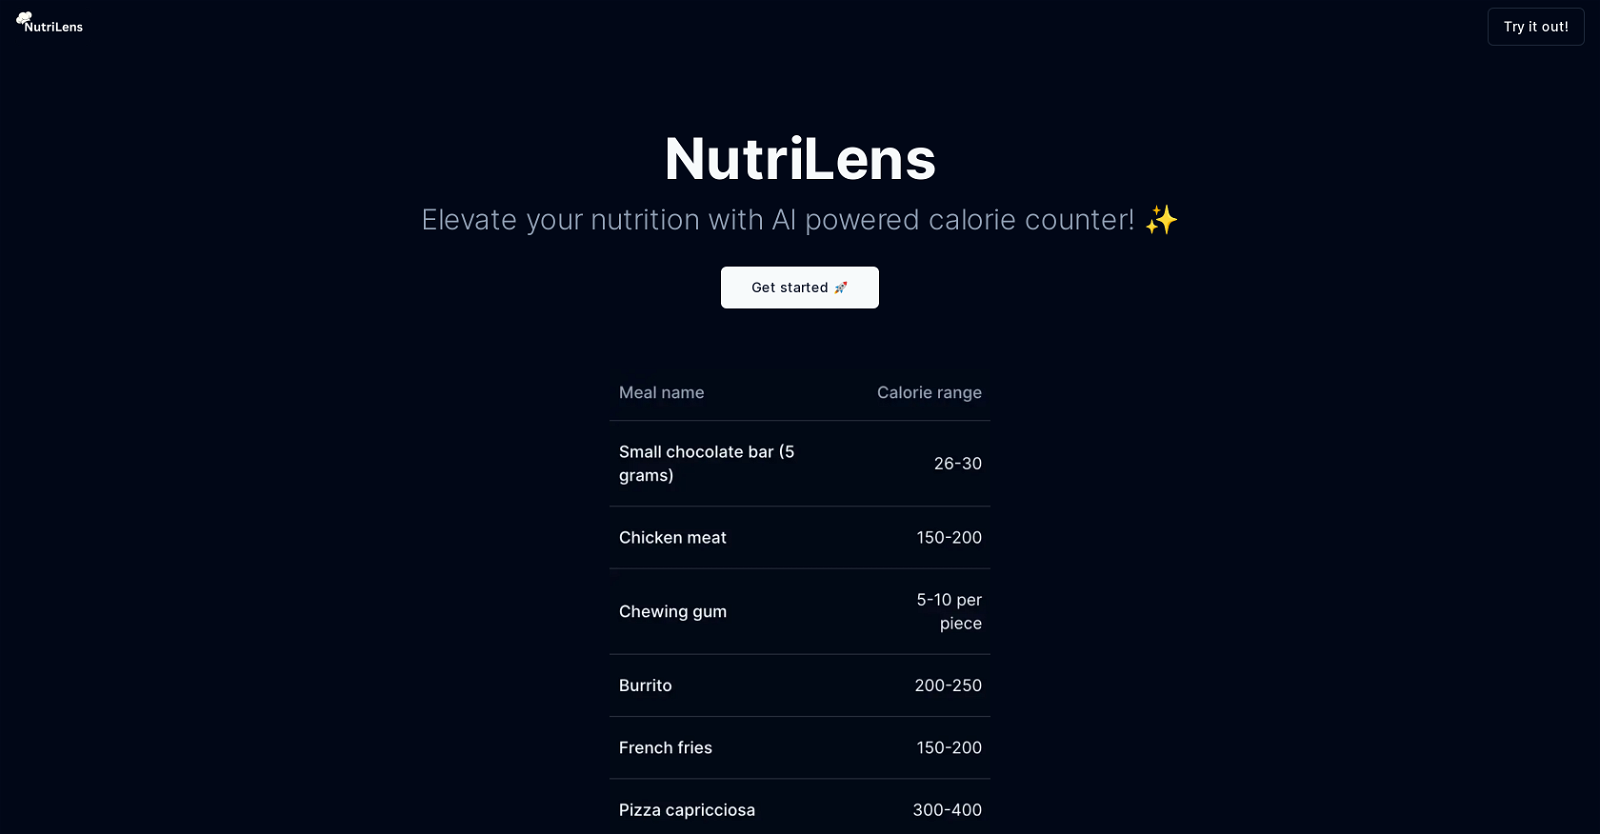 NutriLens website